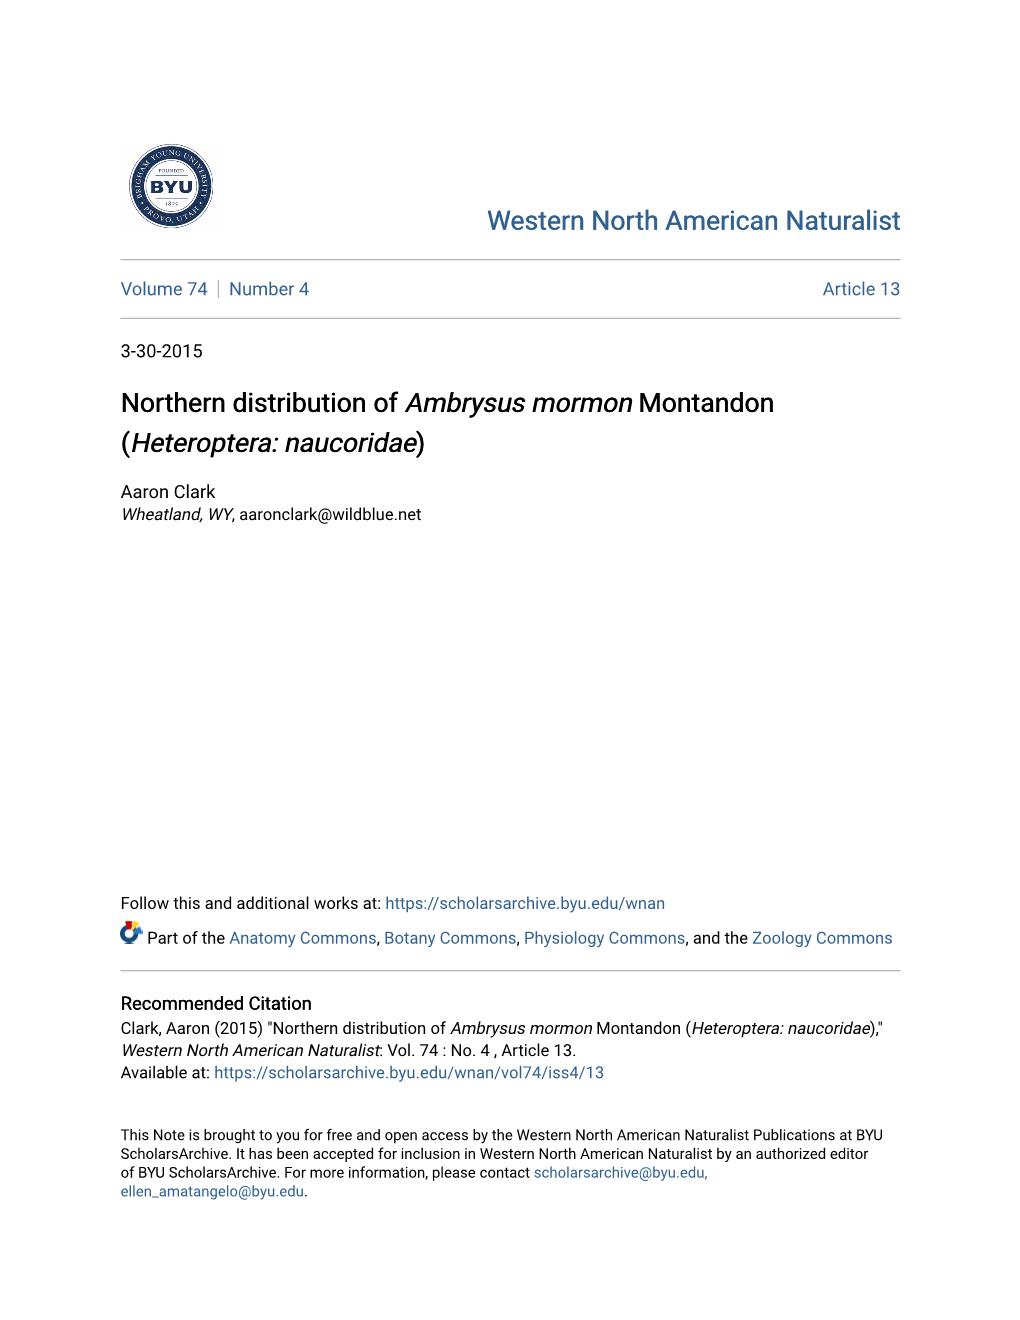 Northern Distribution of Ambrysus Mormon Montandon (Heteroptera: Naucoridae)